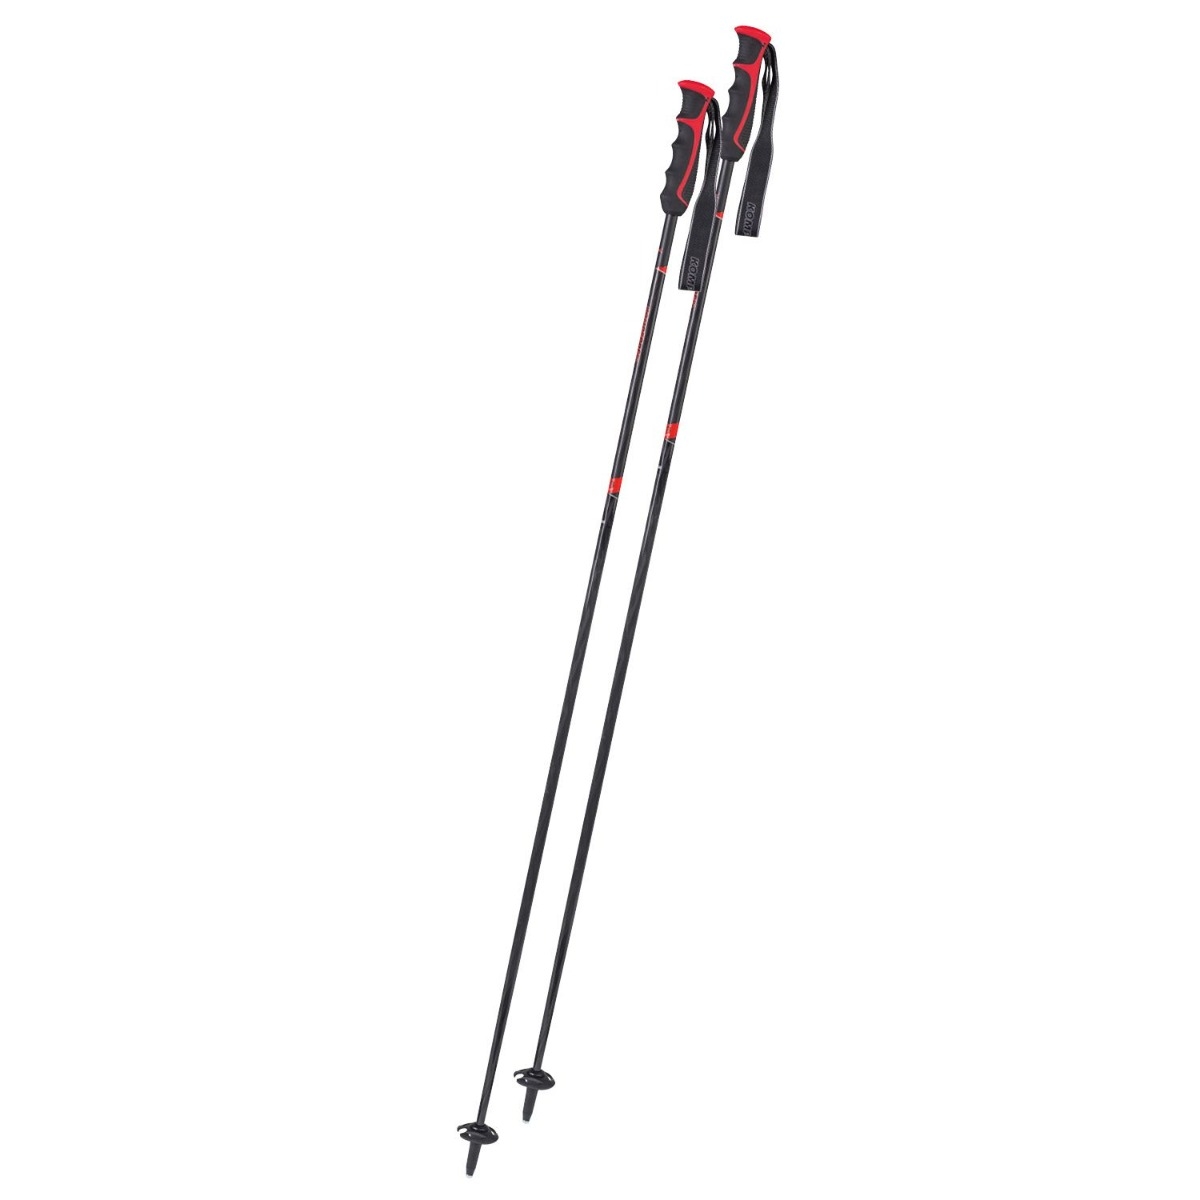 Komperdell Speed Carbon skistokken - Zwart/rood